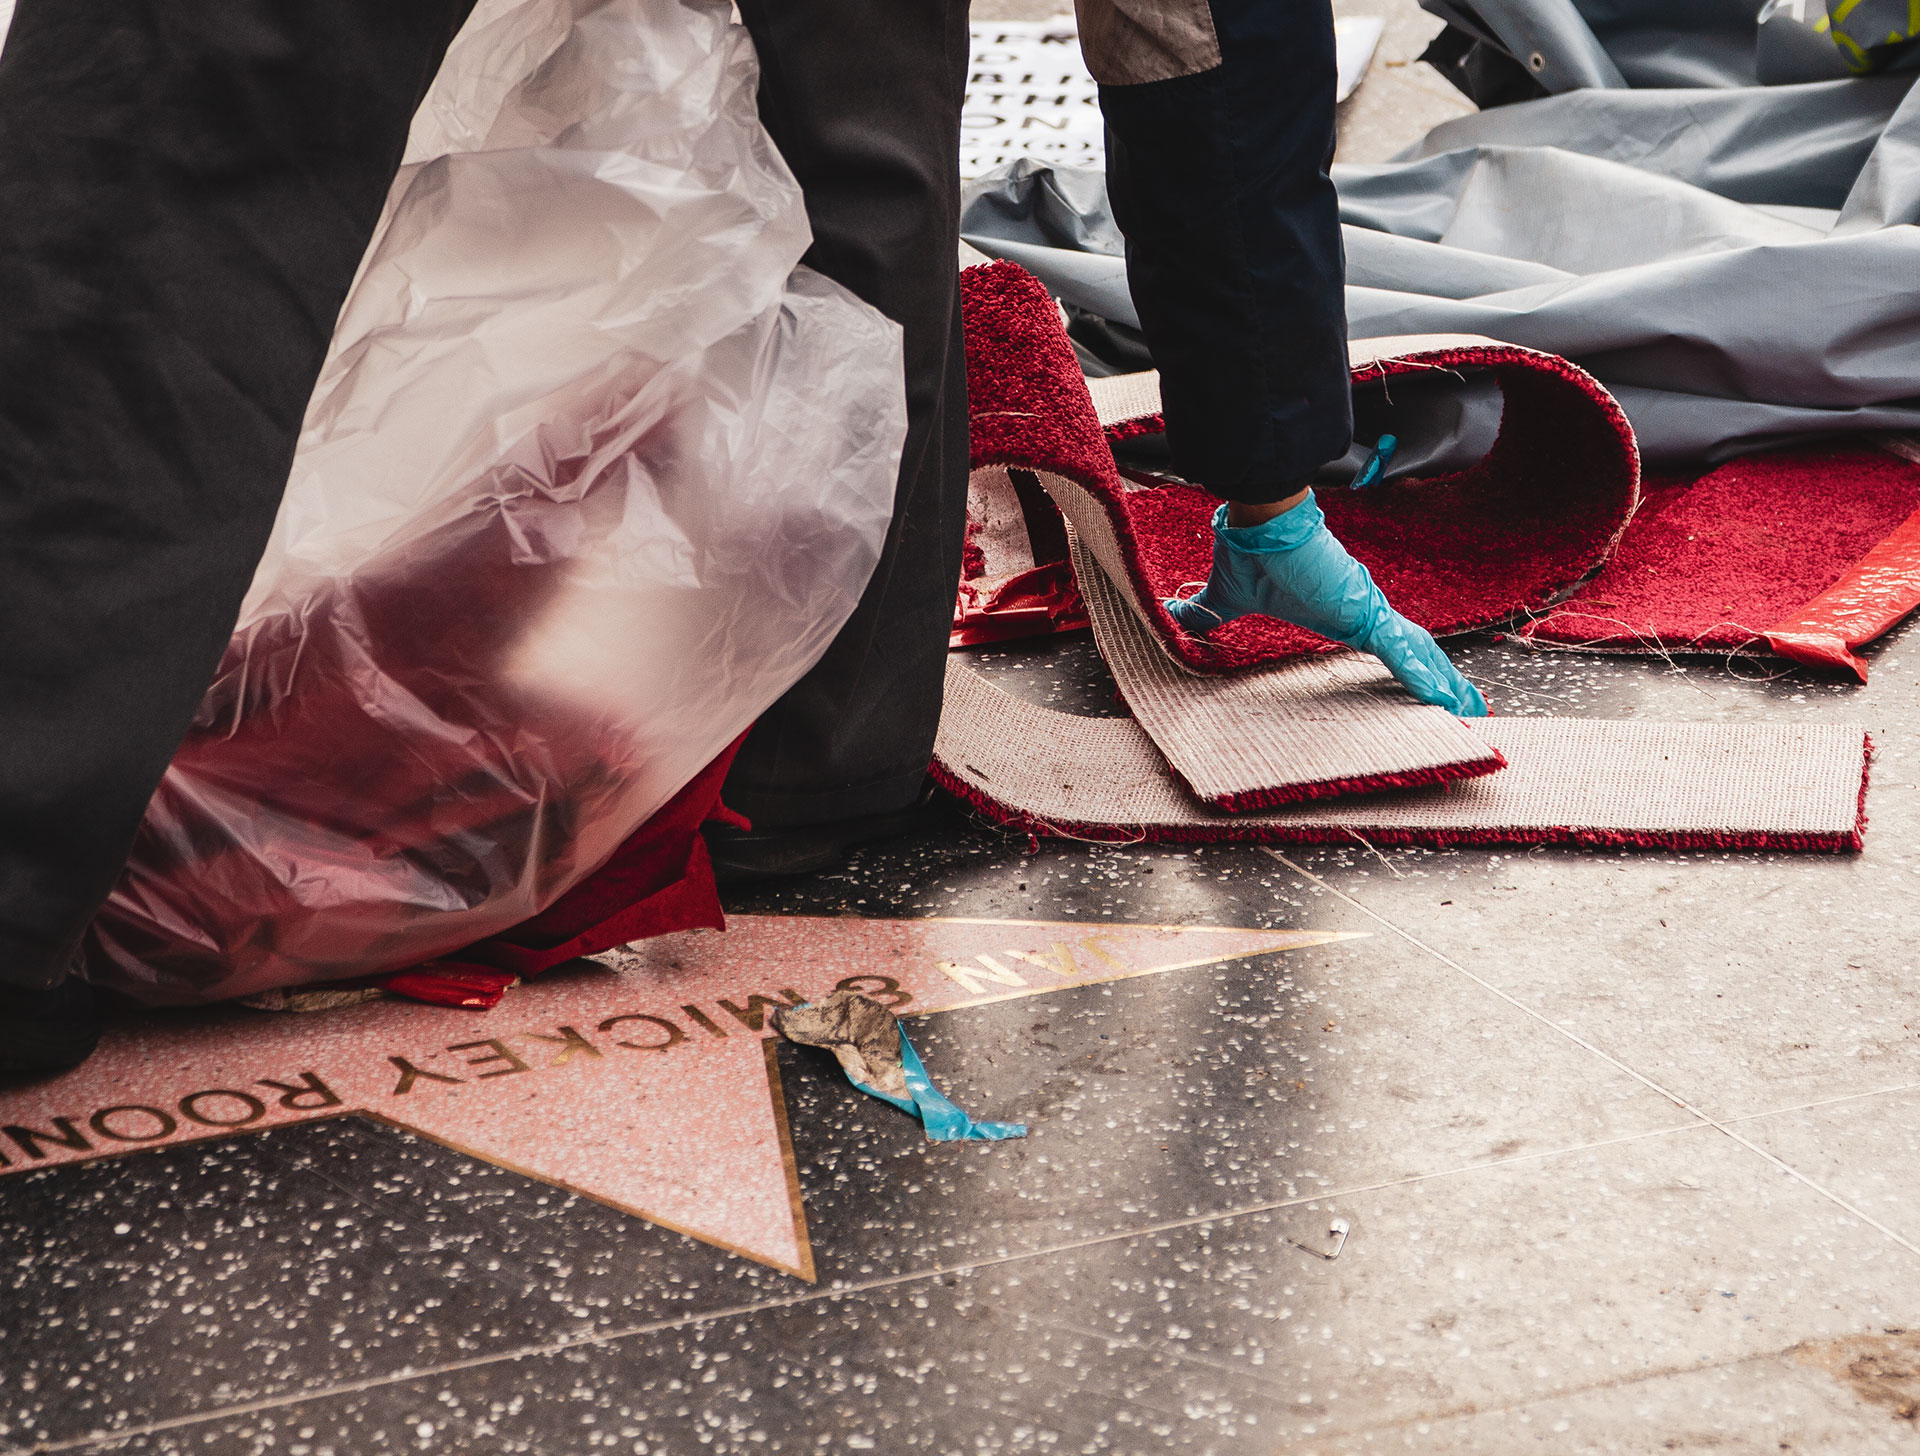 Red Carpet Hollywood